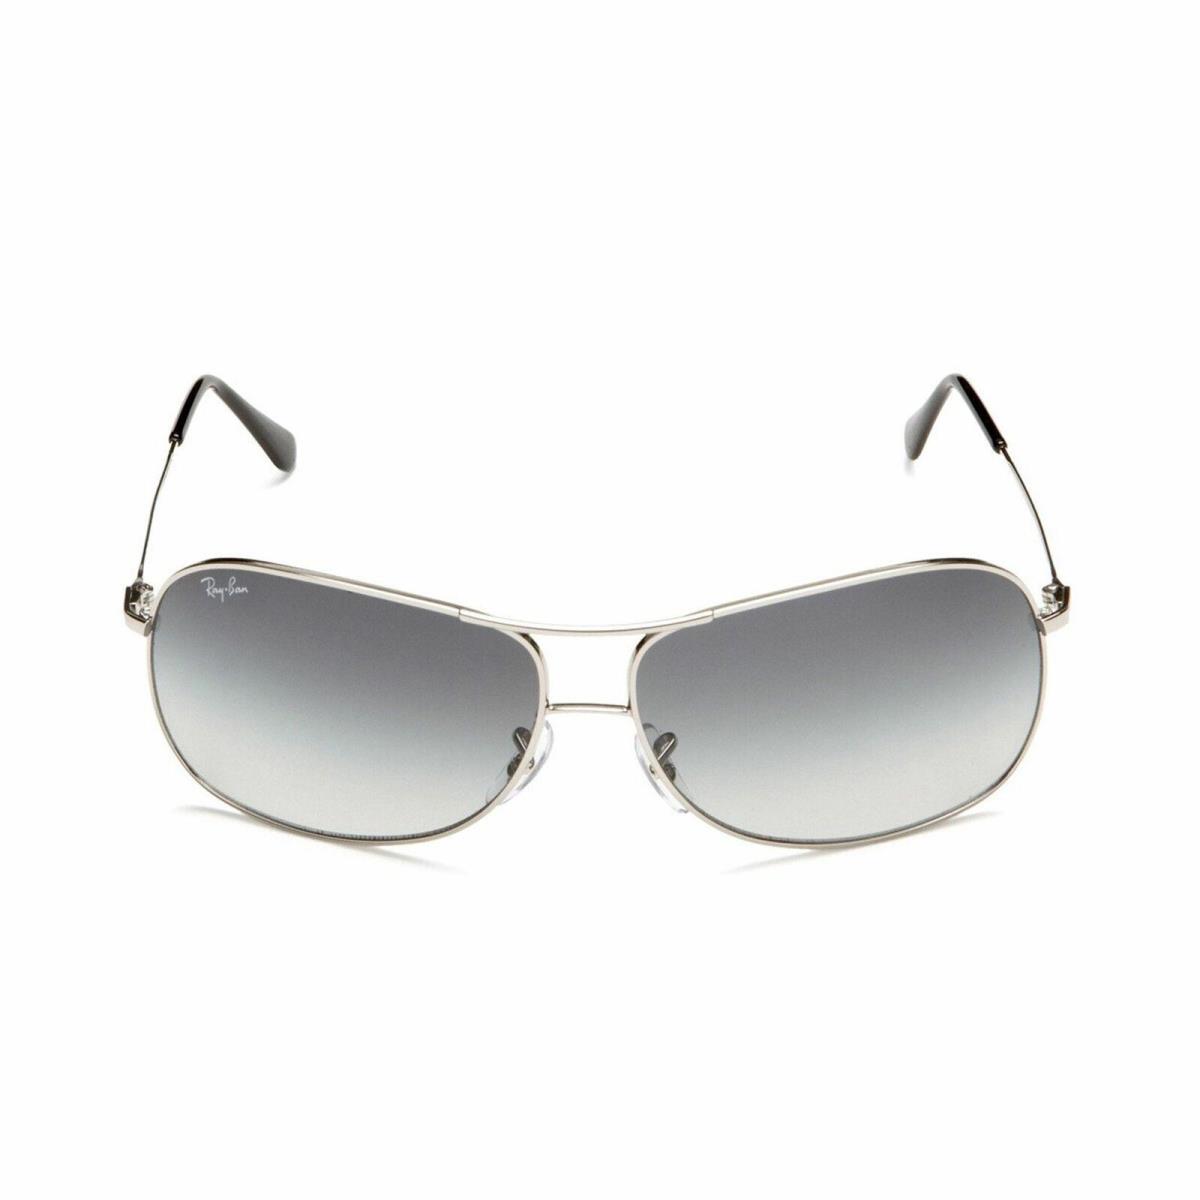 RB3267-003/8G_64 Ray-ban Aviator Sunglasses - Frame: Silver, Lens: Gray